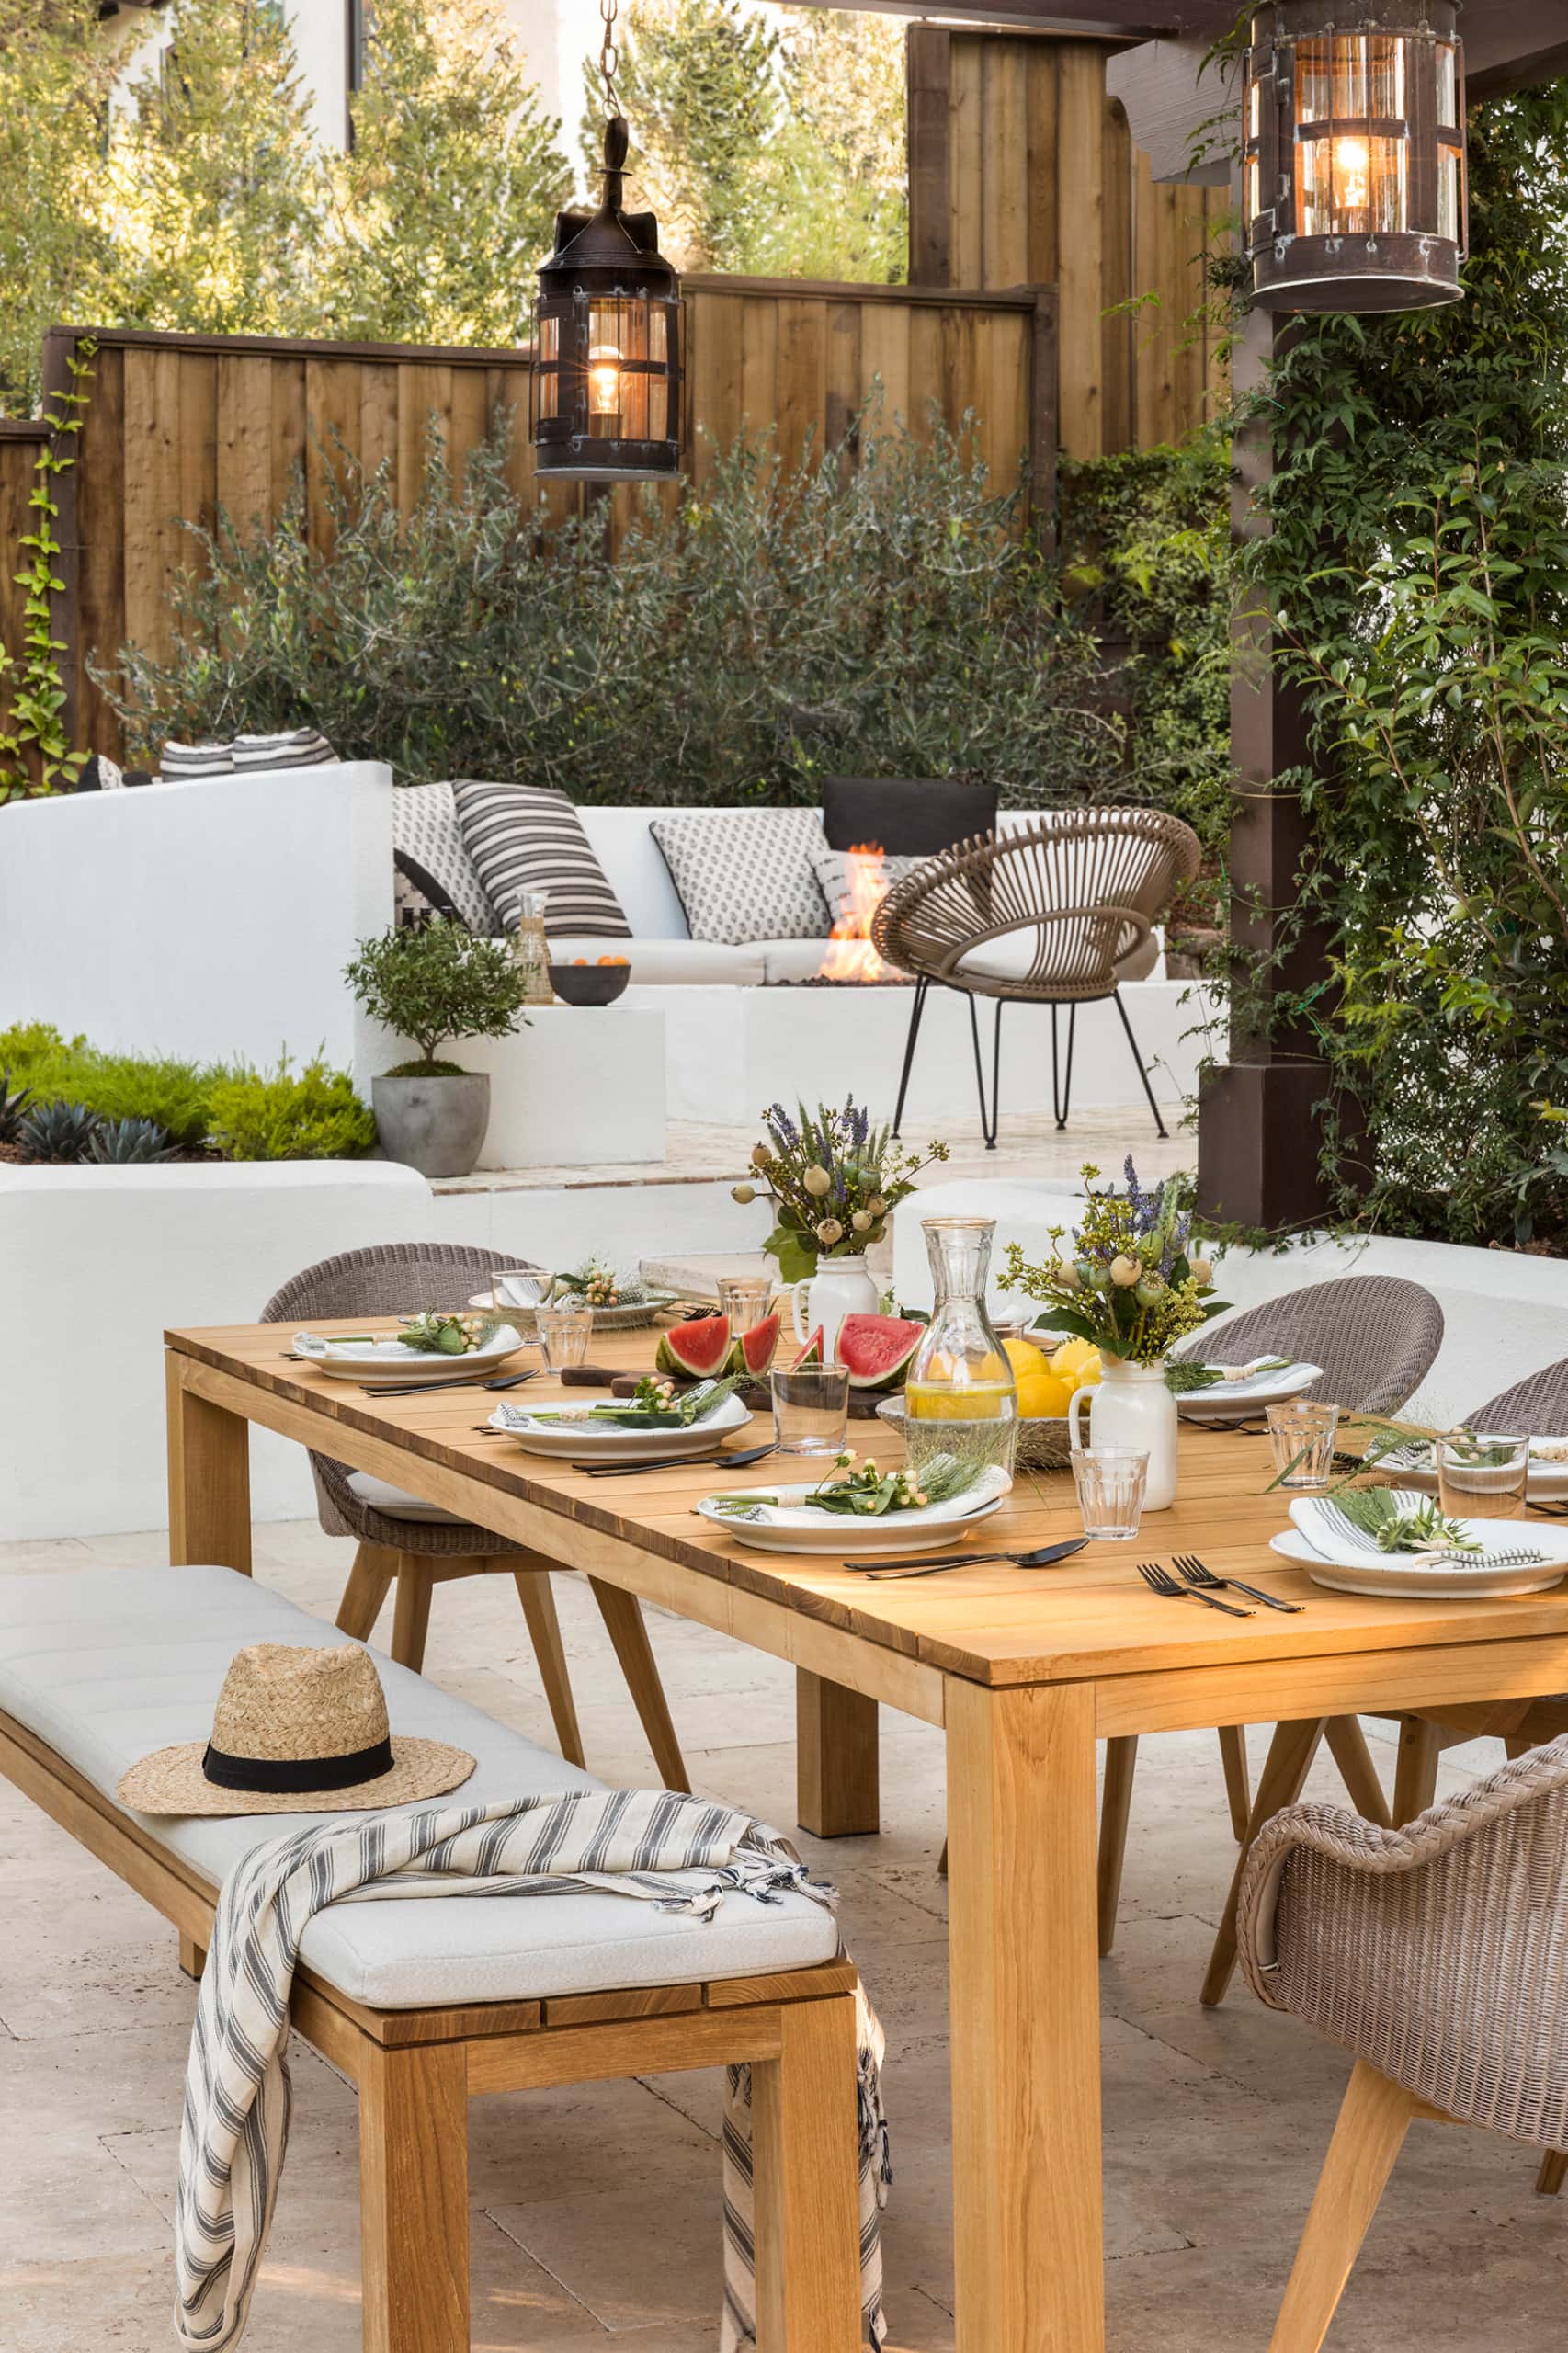 California Casual Design home tour in Hillsborough featuring a patio